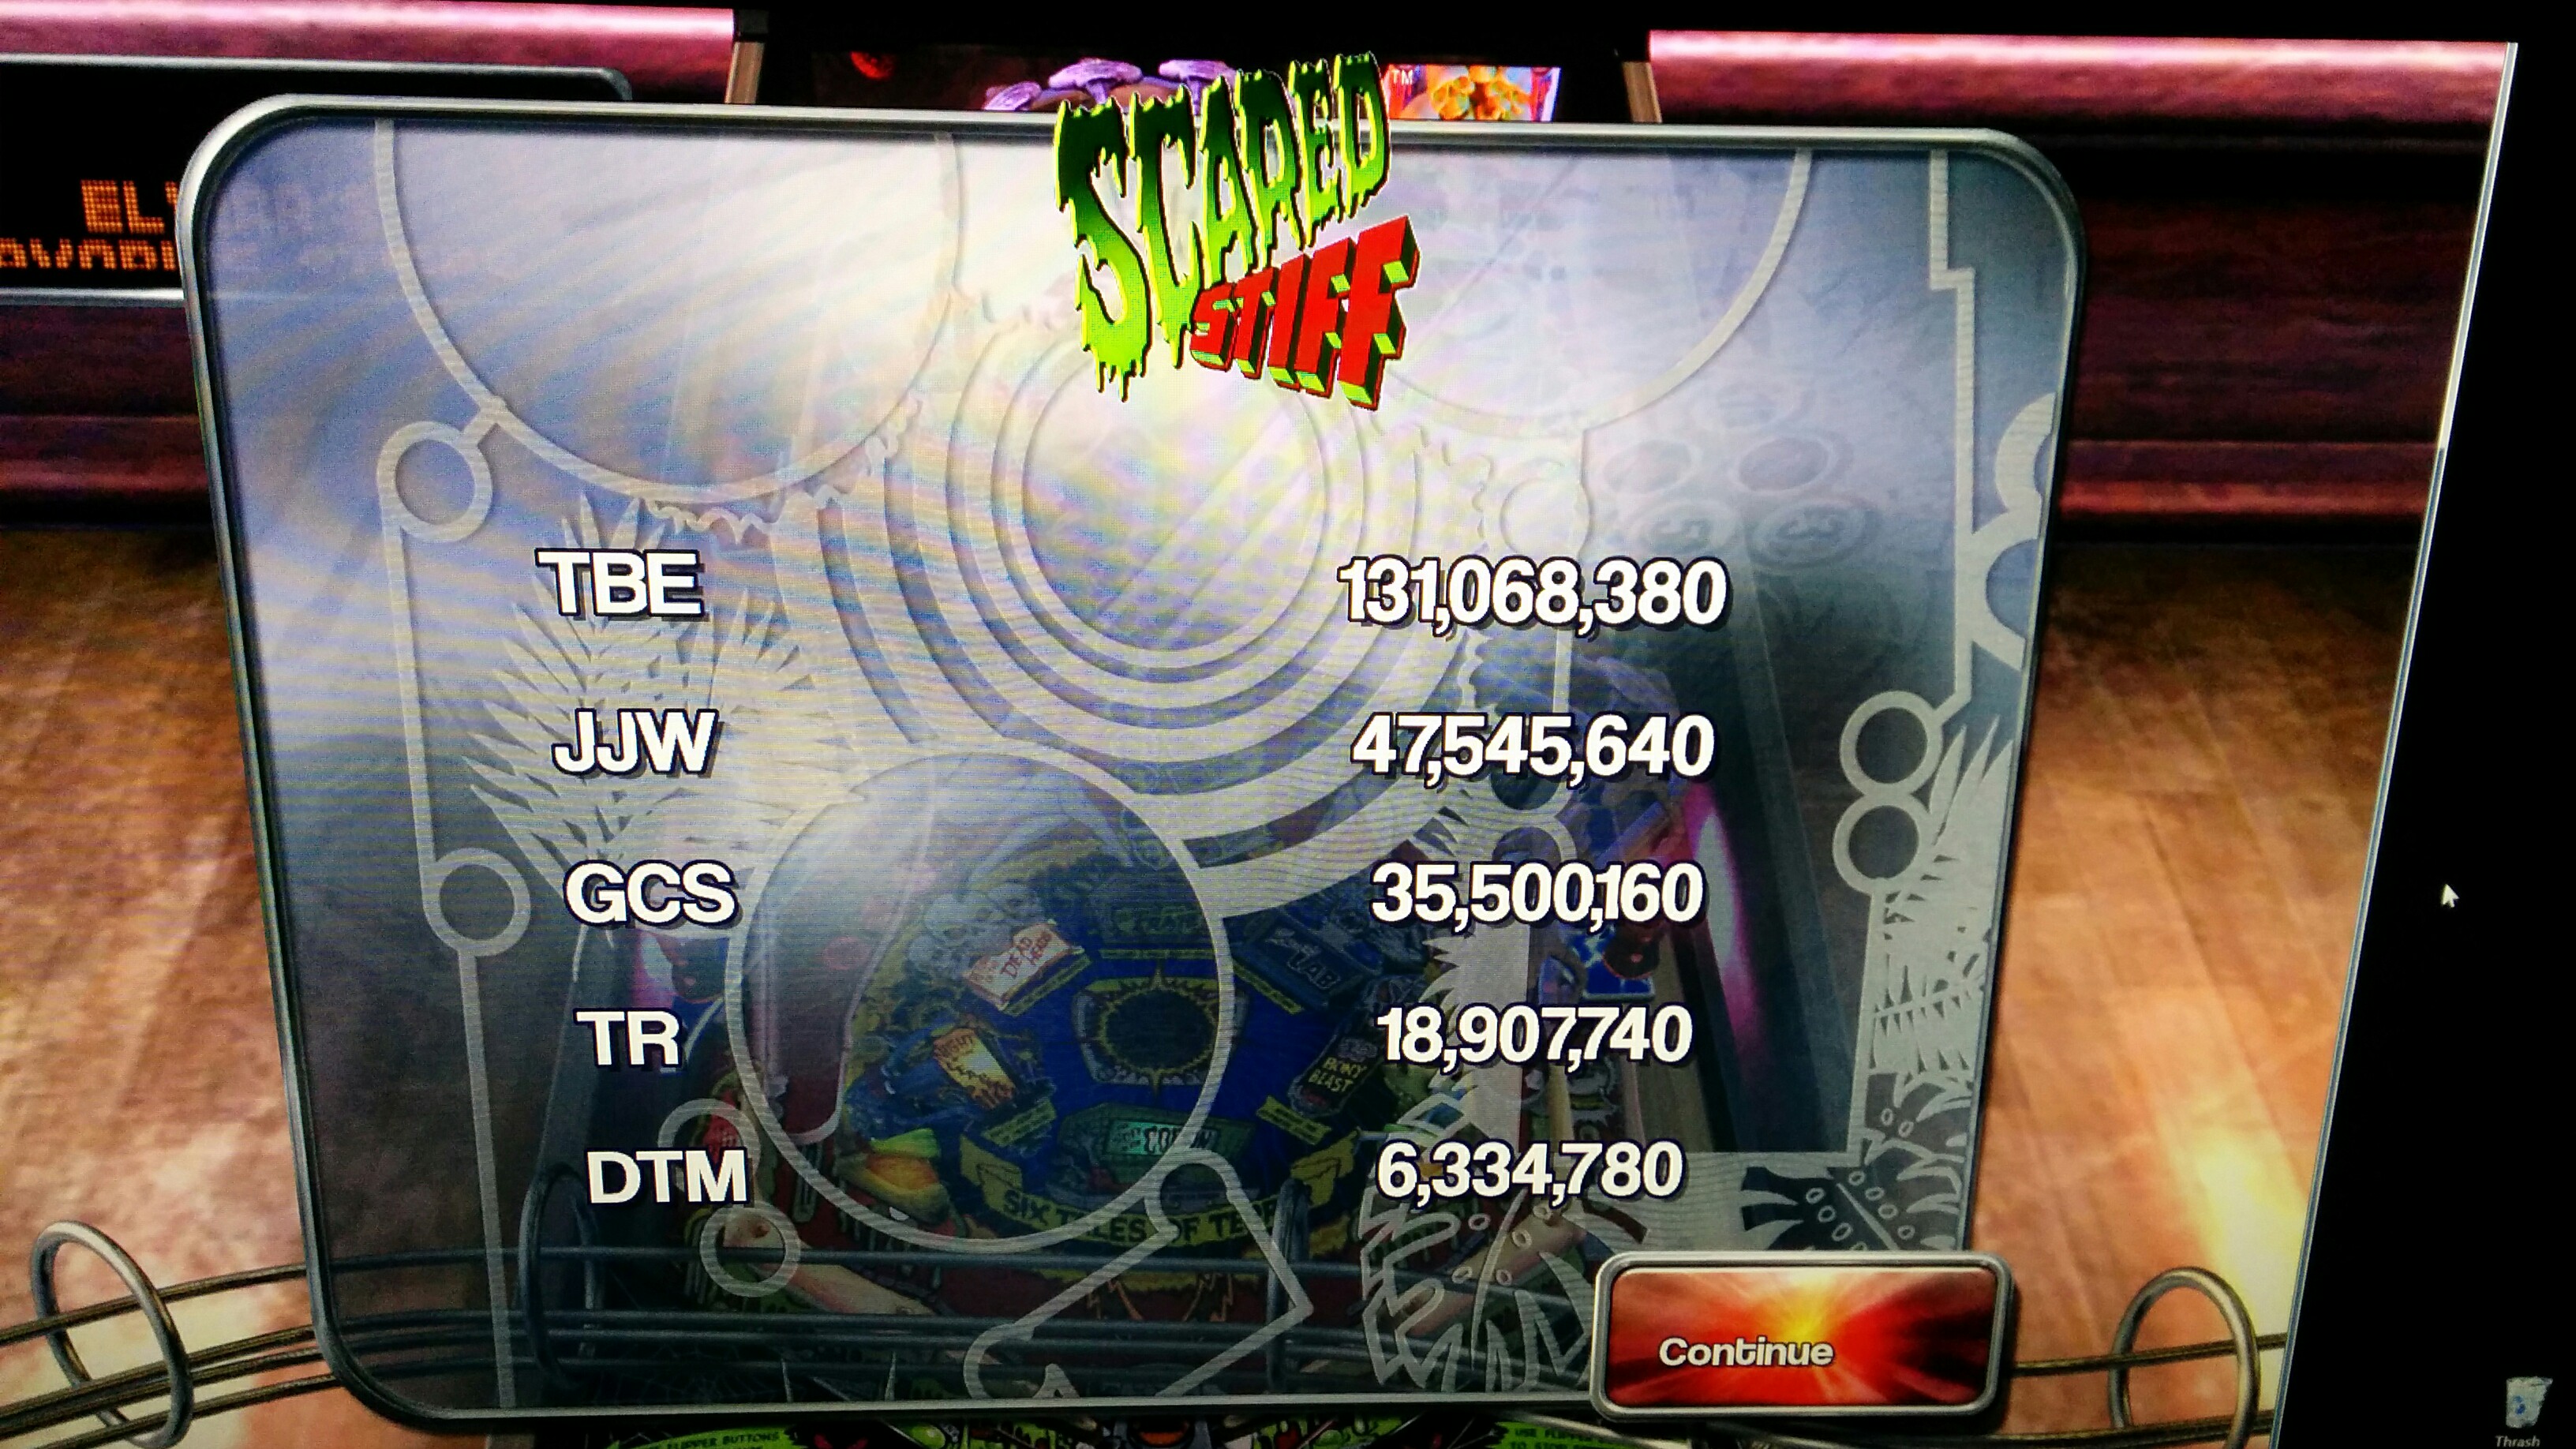 Sixx: Pinball Arcade: Scared Stiff (PC) 131,068,380 points on 2015-02-17 16:43:40